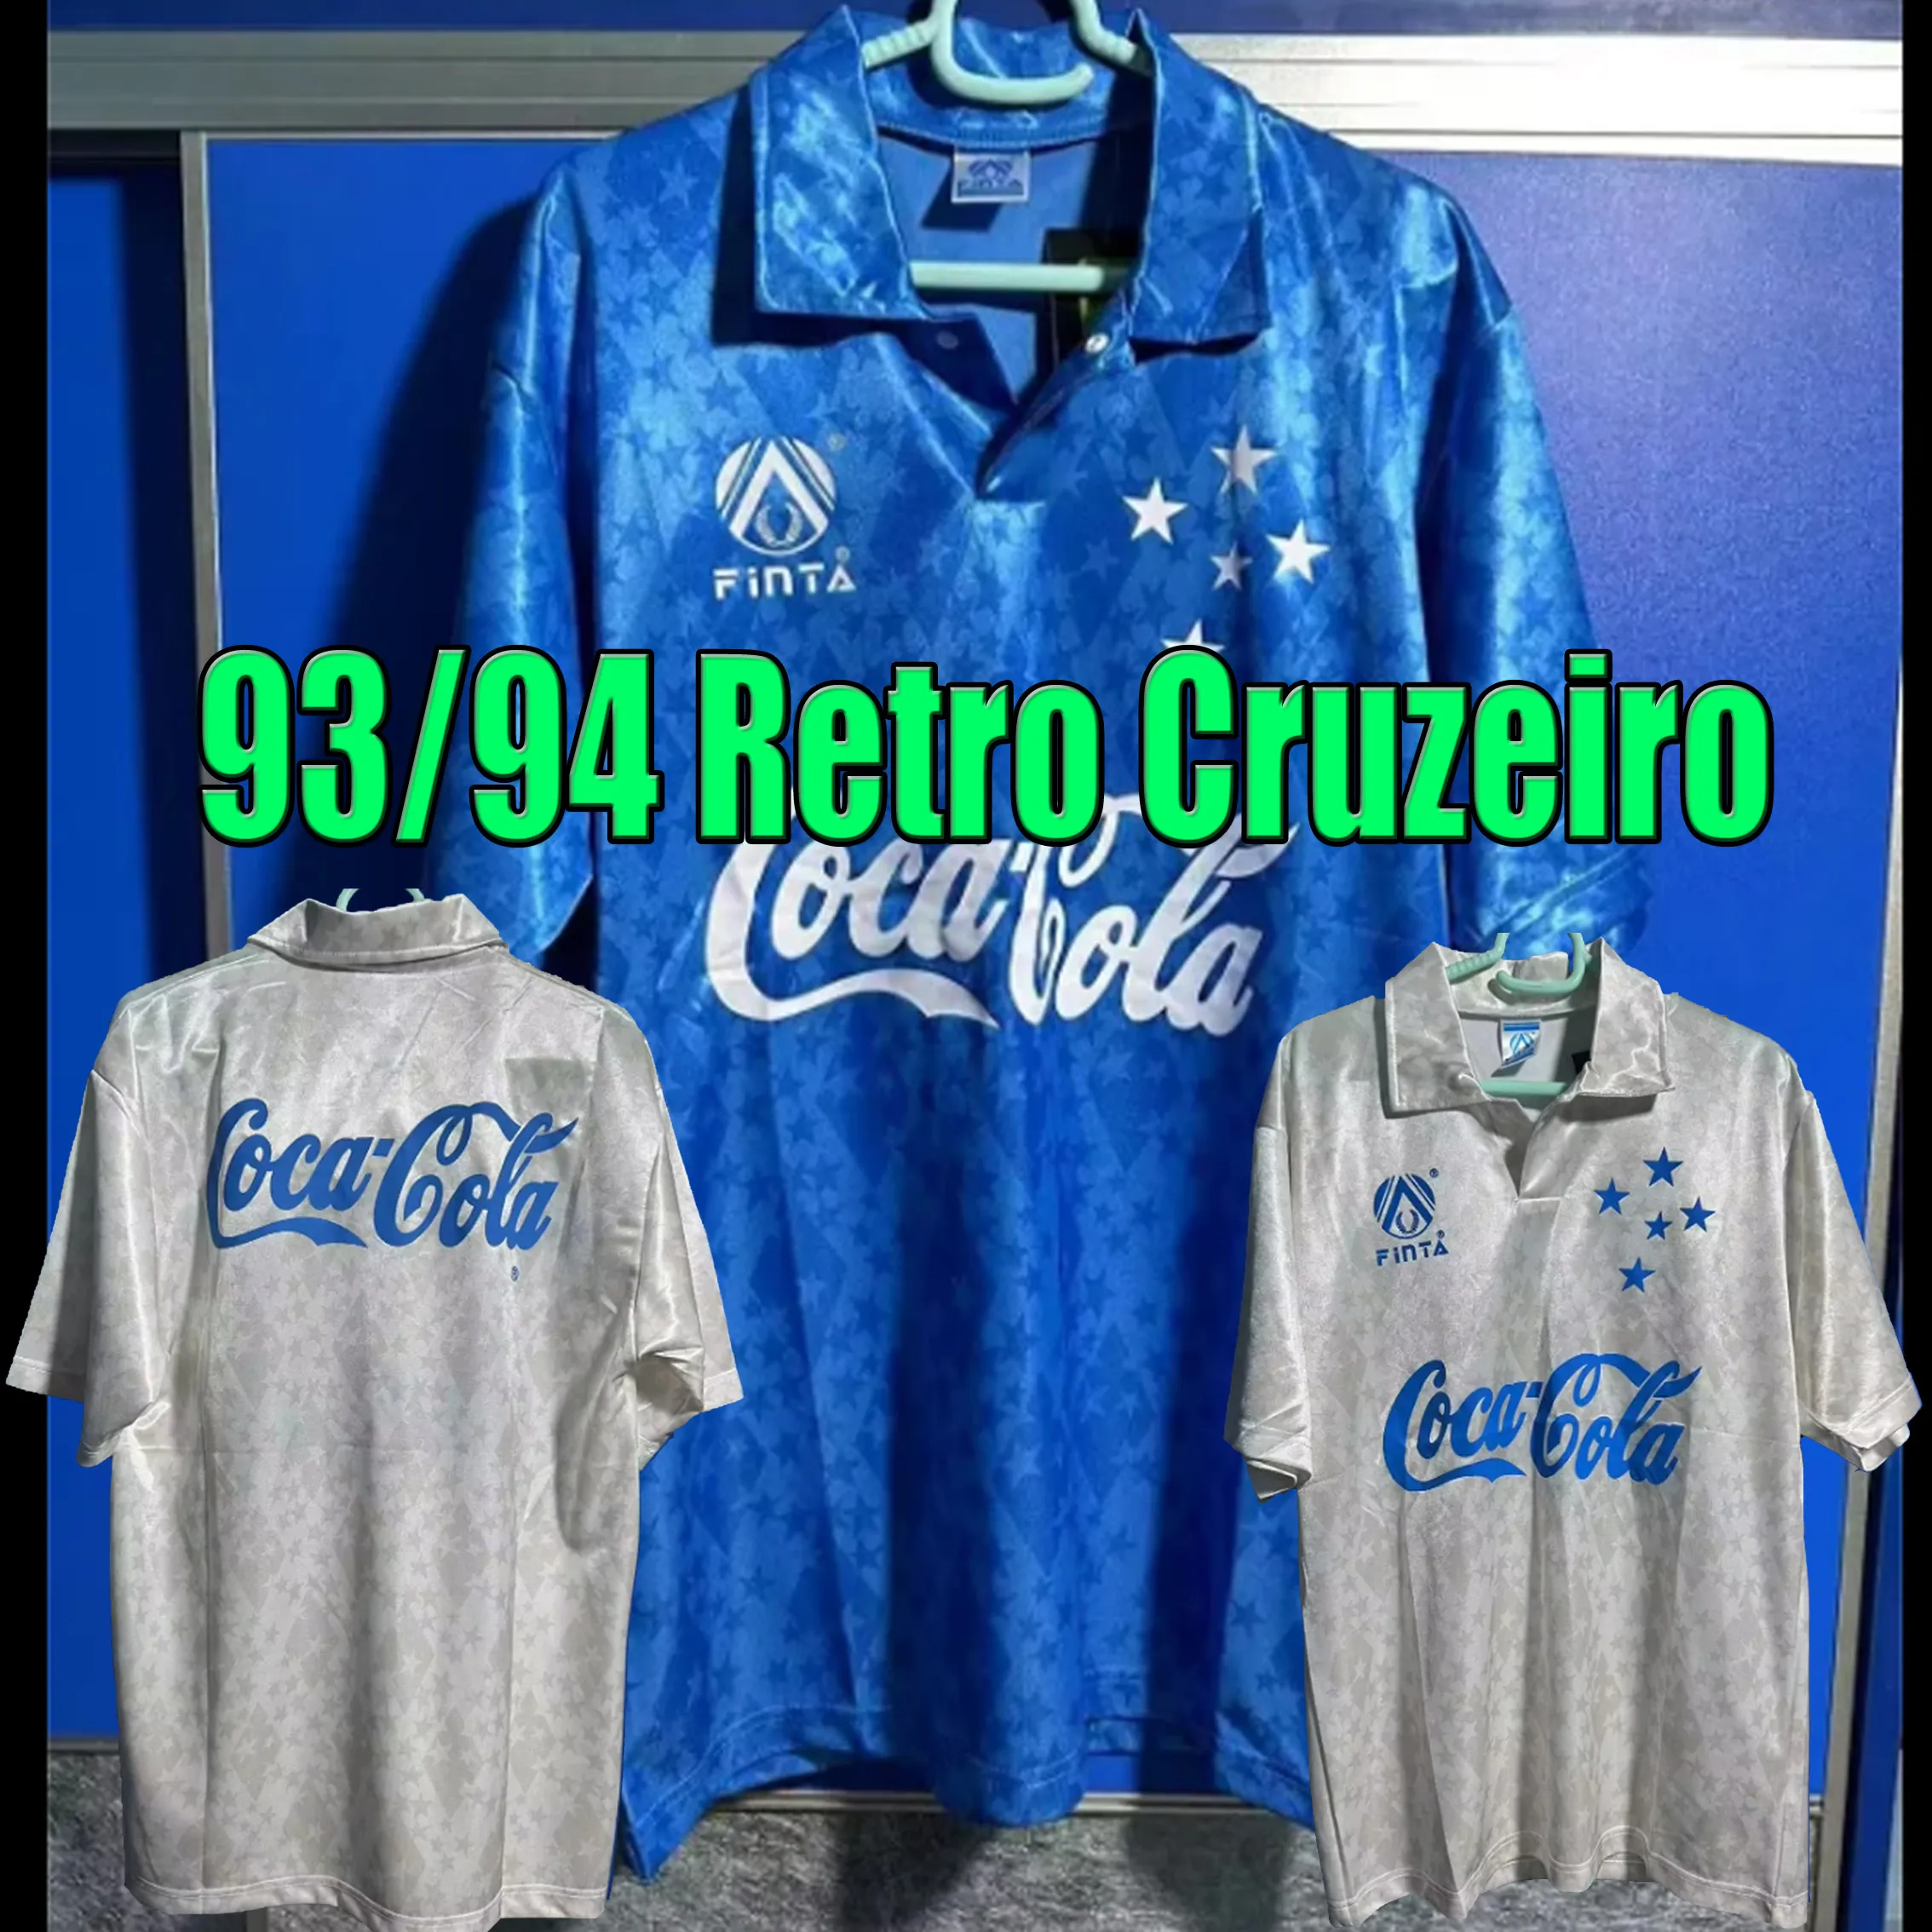 1993/1994 Cruzeiro Retrot-shirt cerezo Belletti Home Away Football Jersey 93/94 Cruzeiro Classic Football Shirts